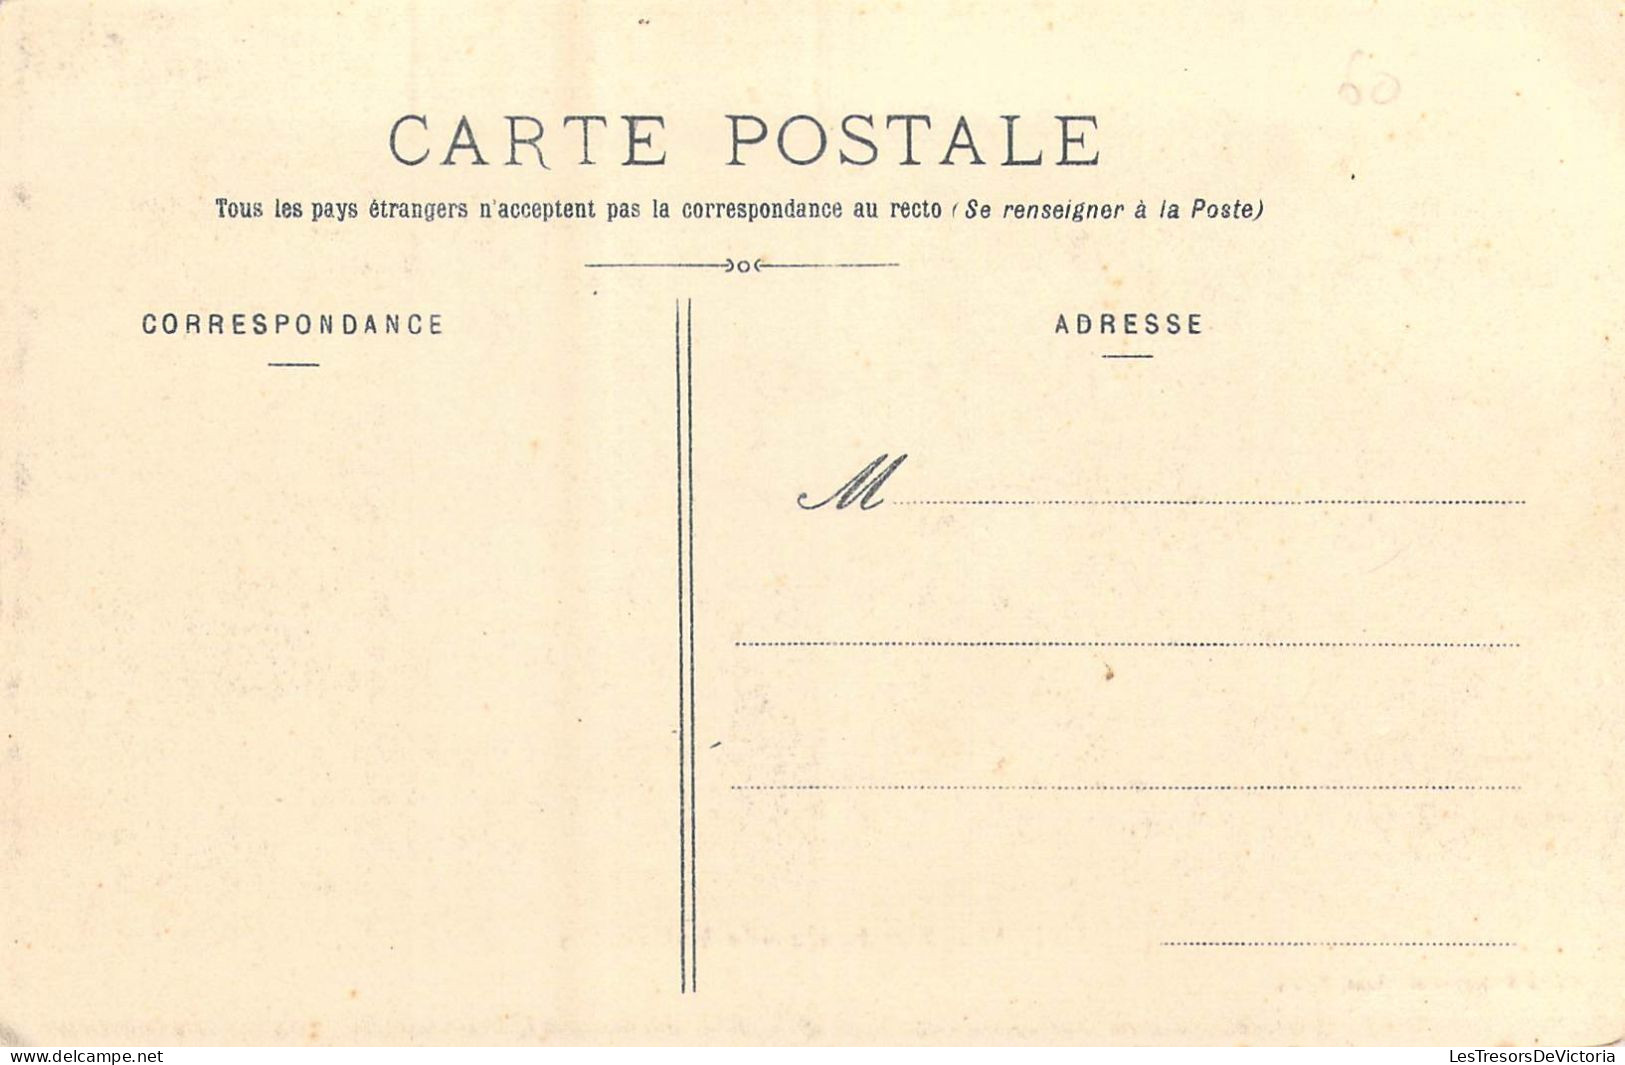 FRANCE - 88 - Epinal - Rue Boulay-de-la-Meurthe - Carte Postale Ancienne - Epinal